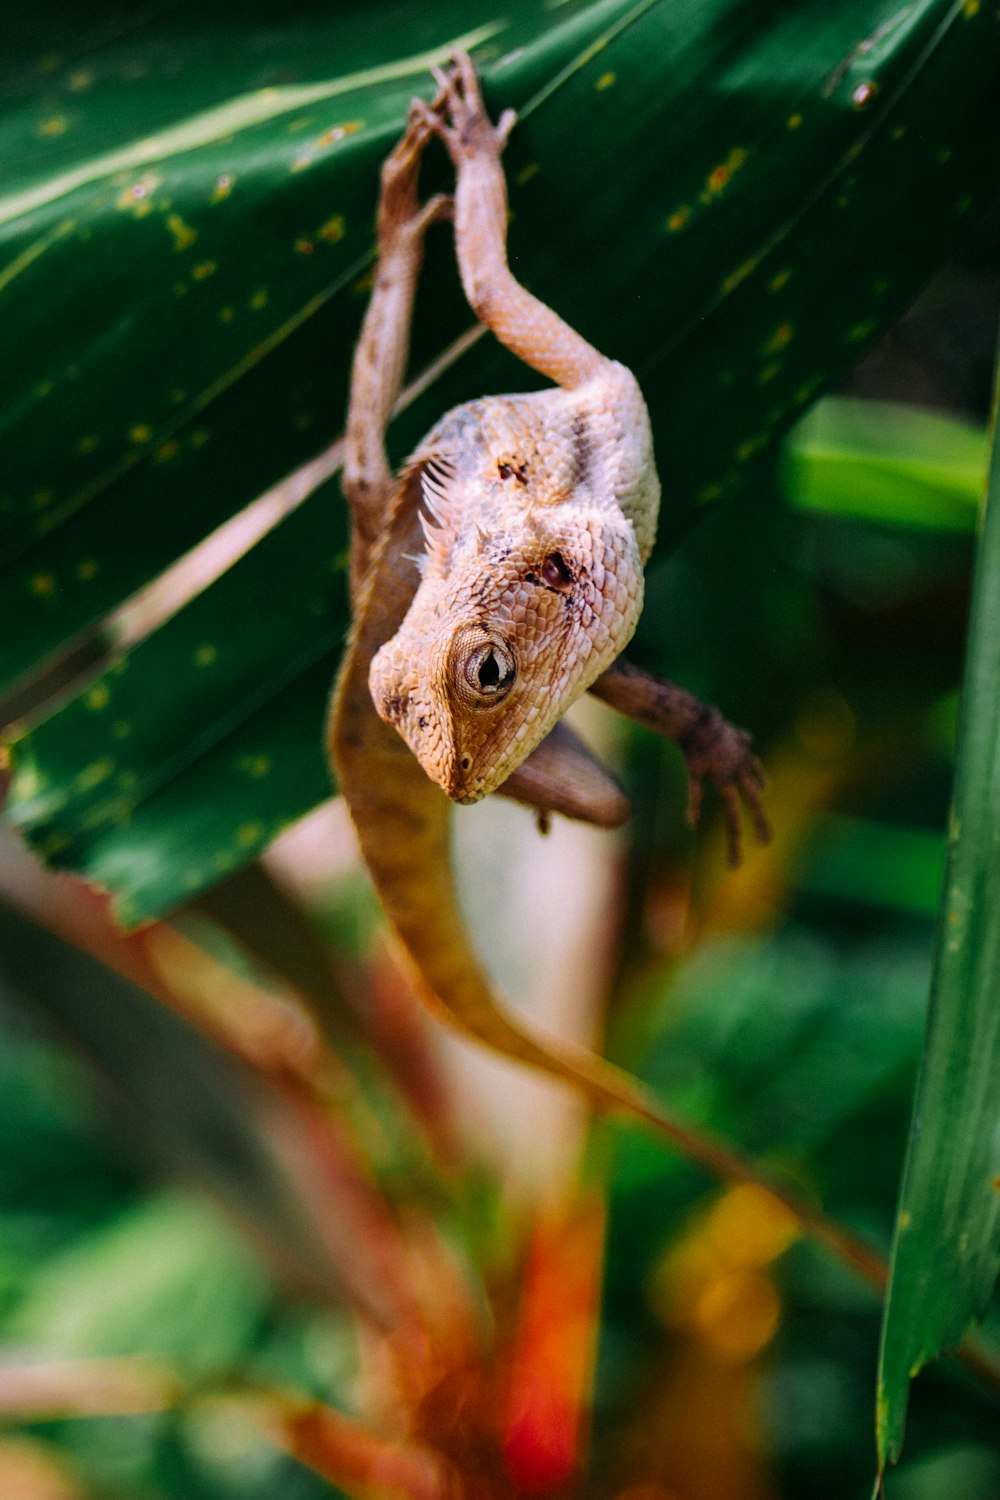 a lizard hanging upside down on a leaf